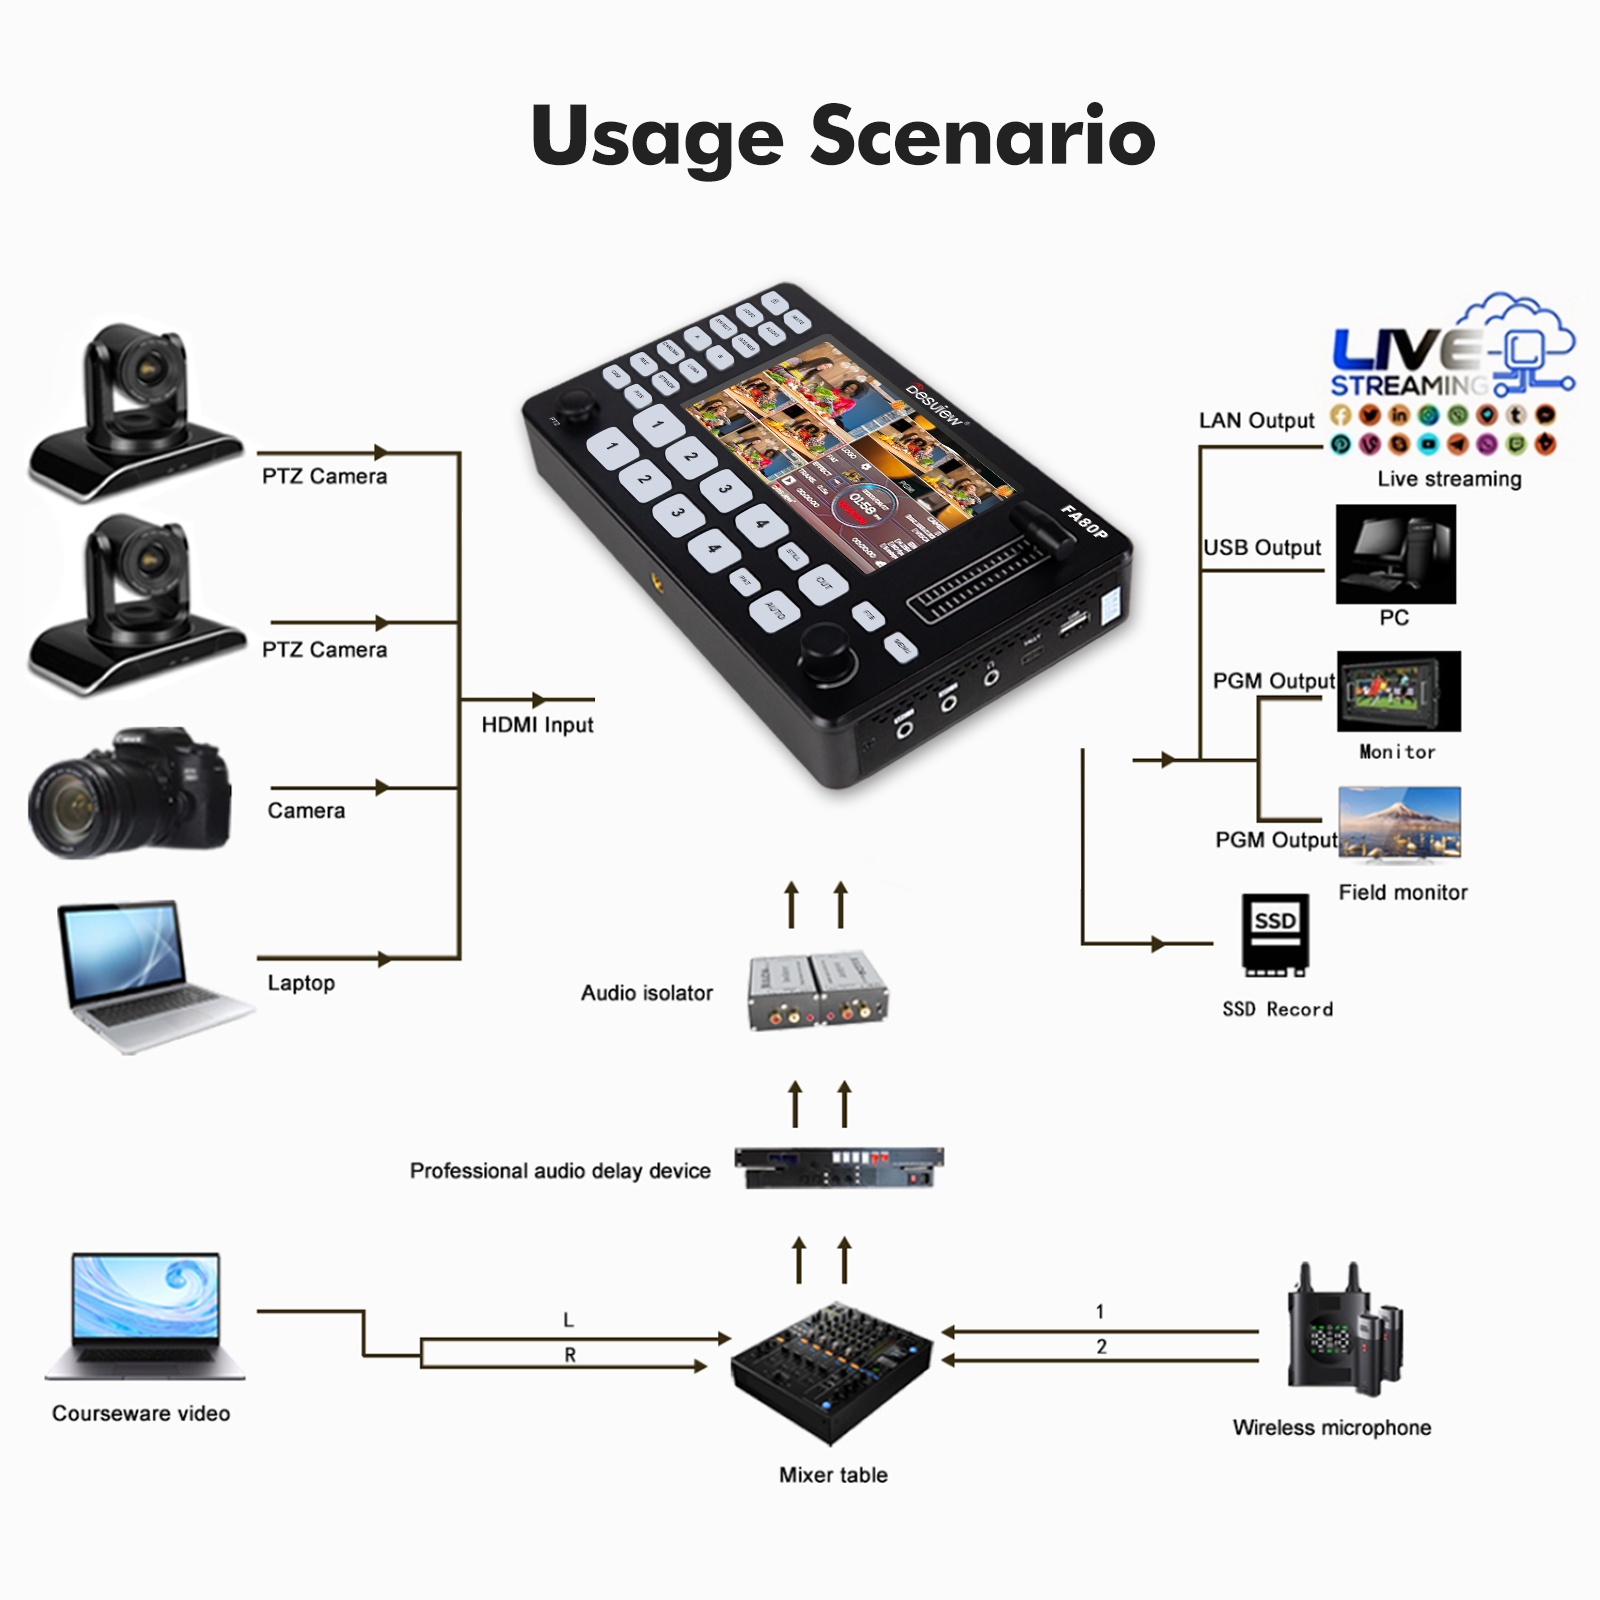 Desview FA80P Video Mixer Switcher Multi Camera Video Mixer Switcher with USB2.0 Recording PTZ Controller Chroma Key 4 4K HDMI